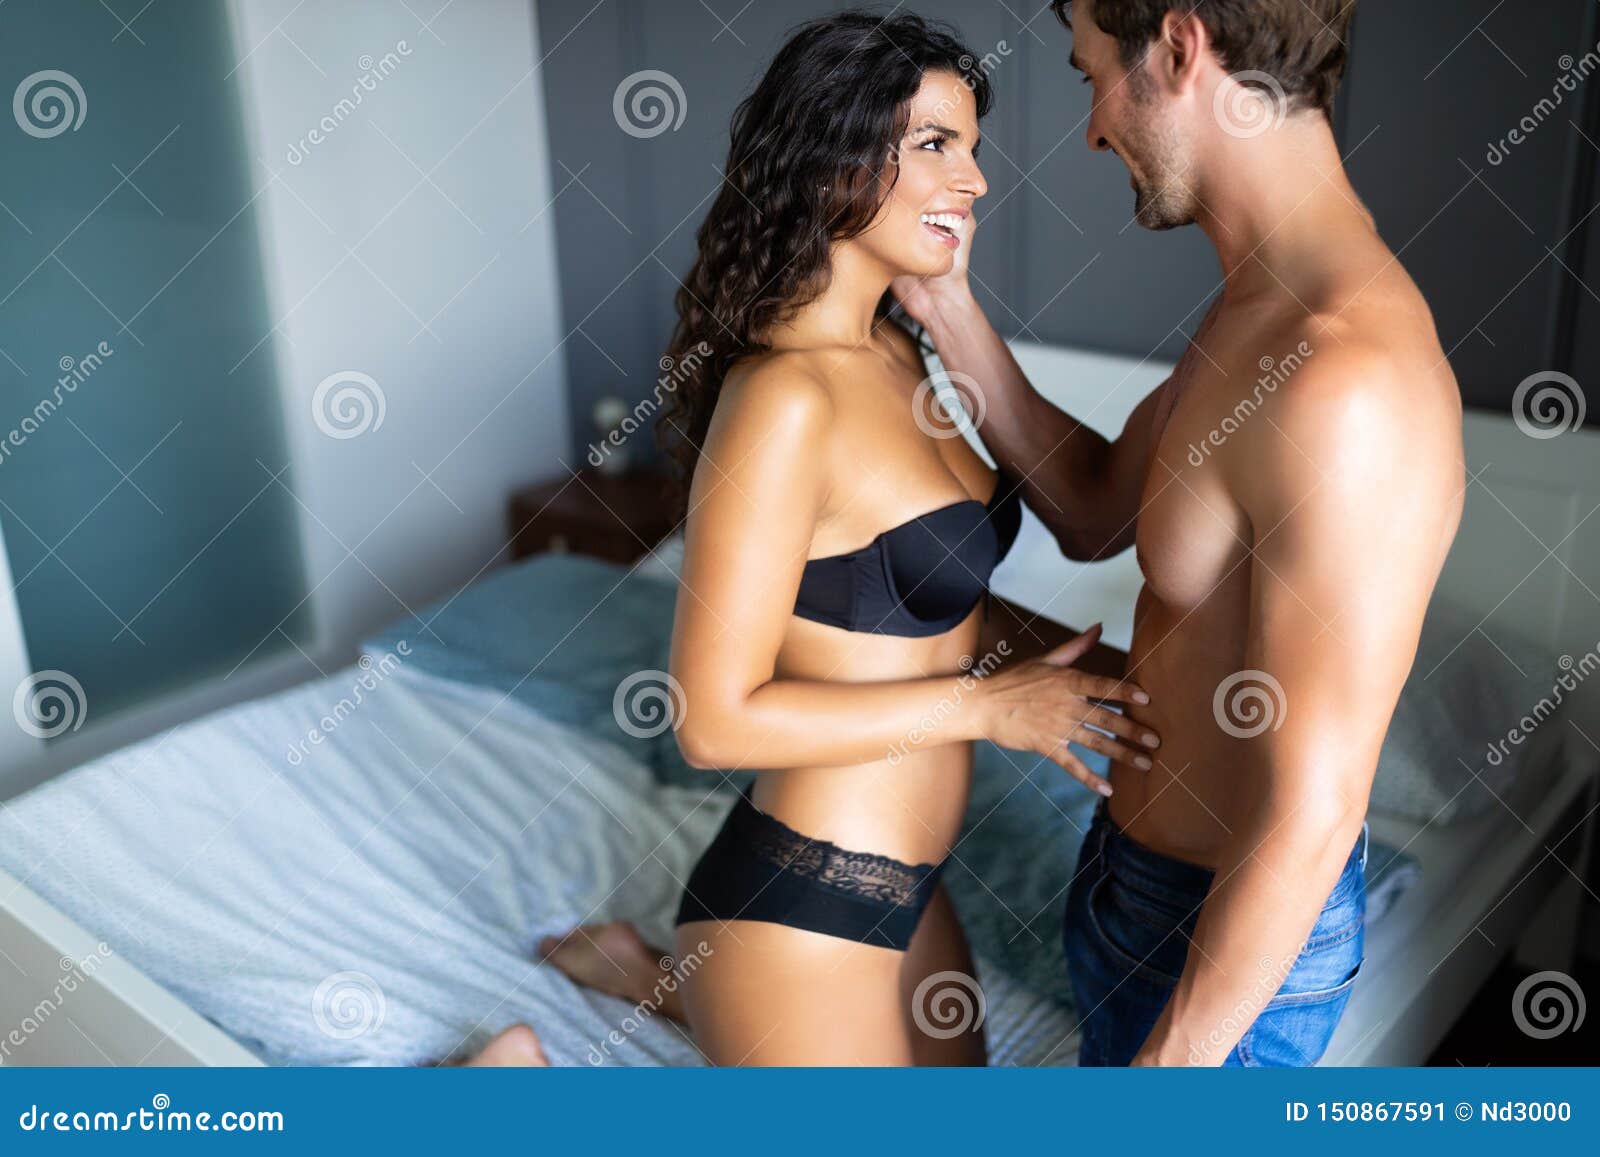 arousing foreplay for wife xxx free pics